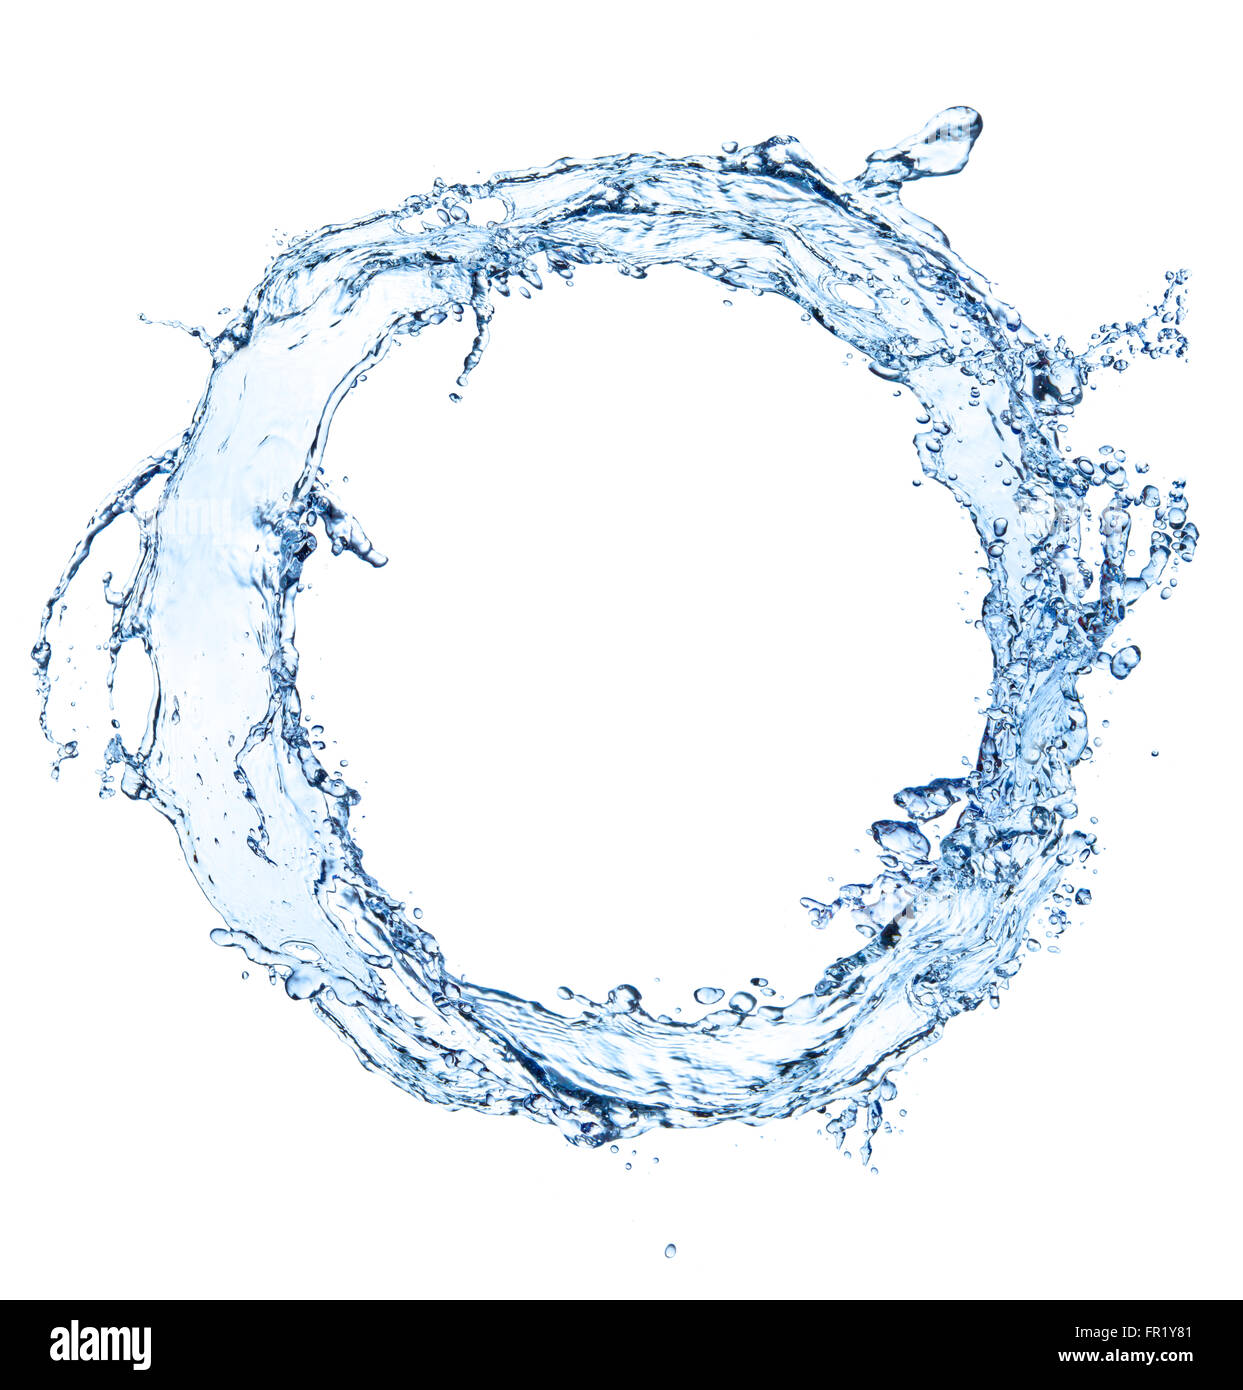 Acqua Splash cerchio isolato su sfondo bianco Foto Stock